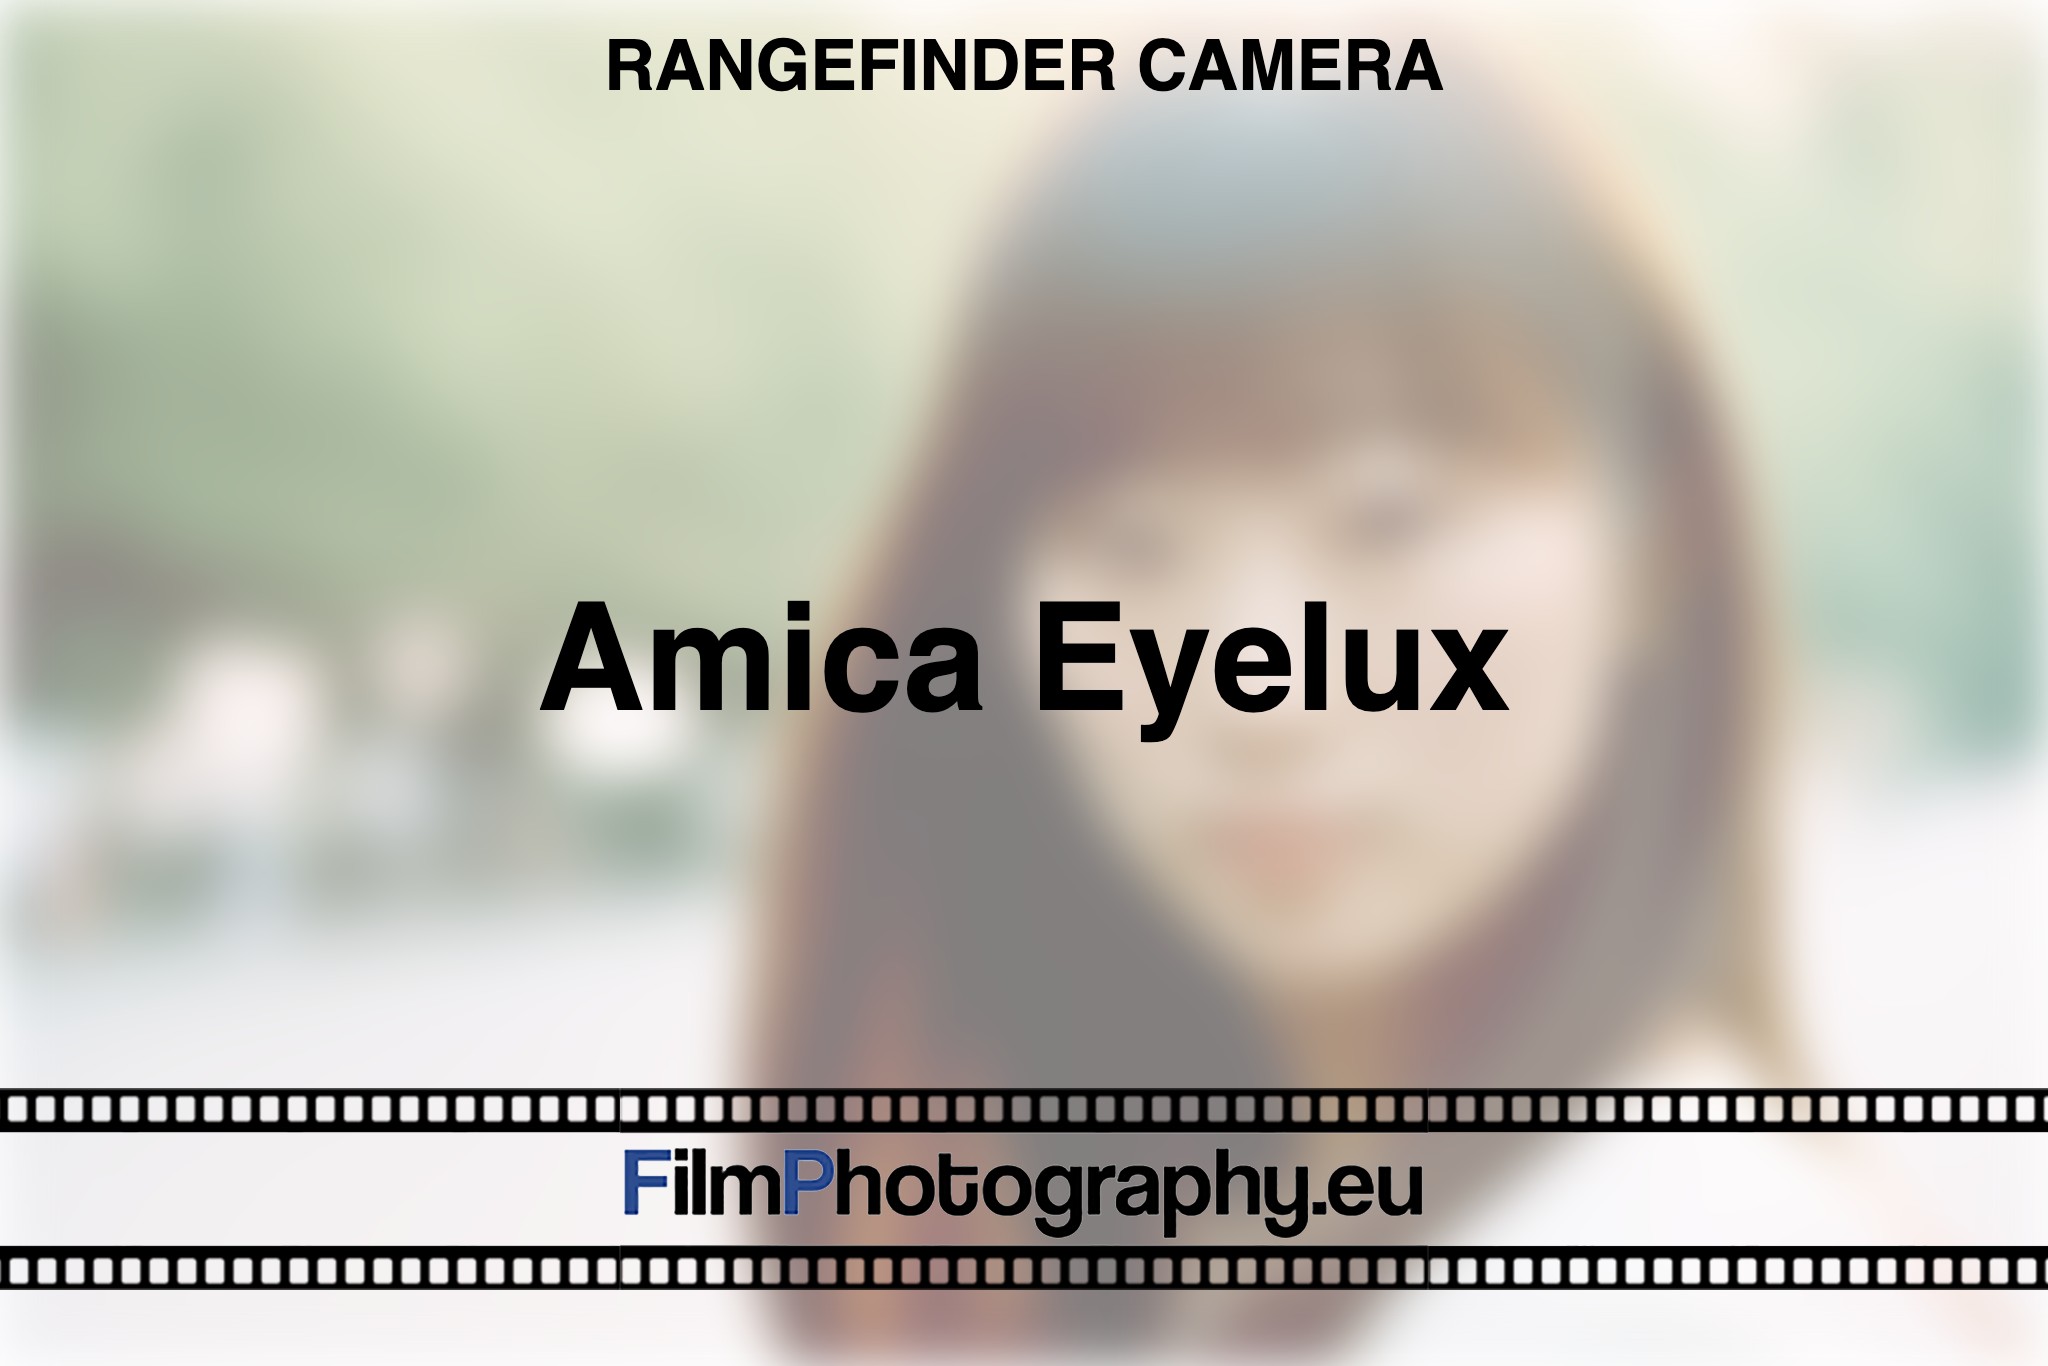 amica-eyelux-rangefinder-camera-bnv